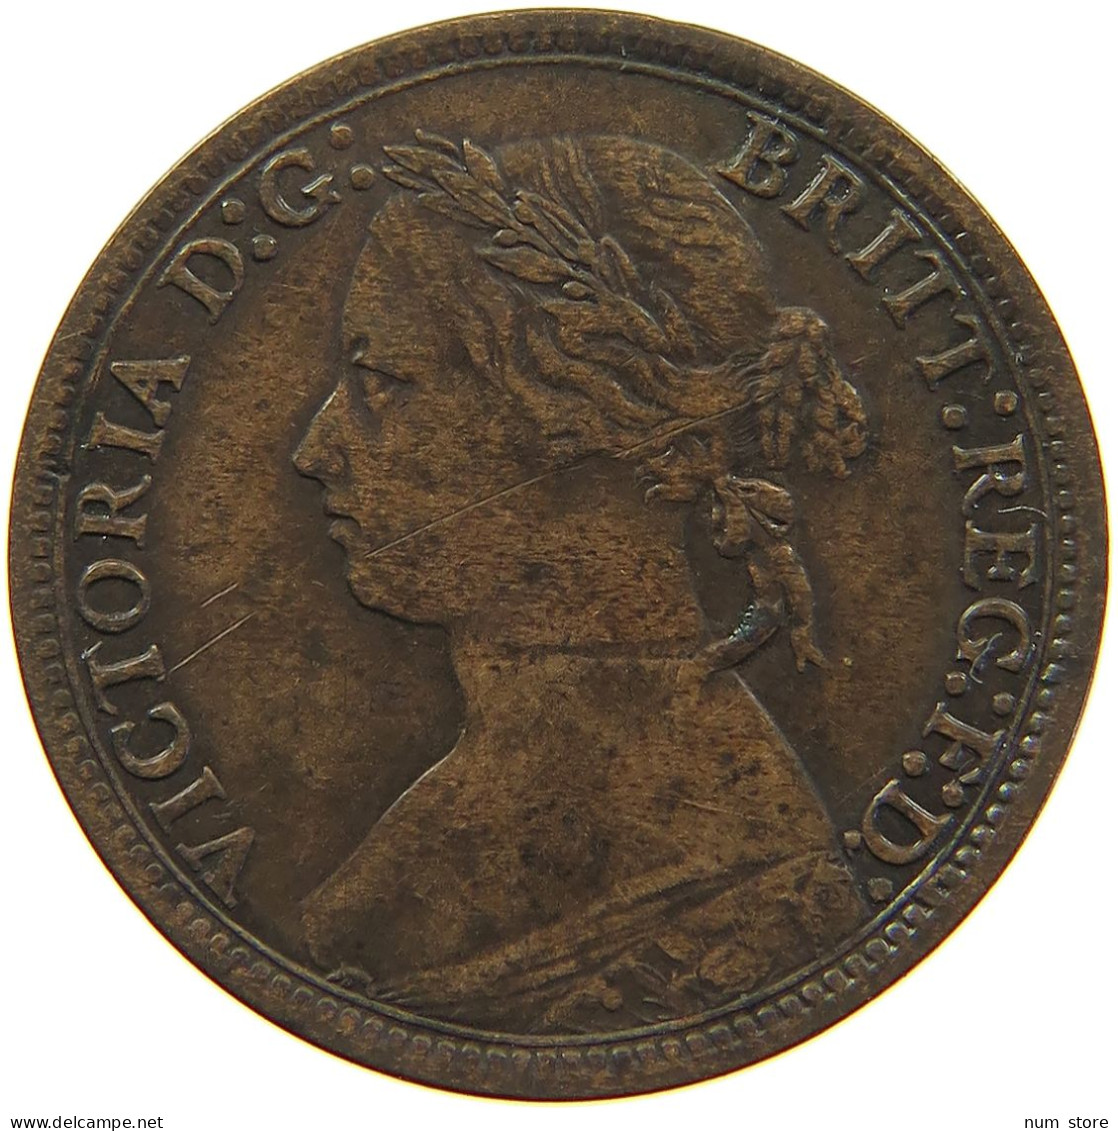 GREAT BRITAIN FARTHING 1878 Victoria 1837-1901 #s012 0327 - B. 1 Farthing